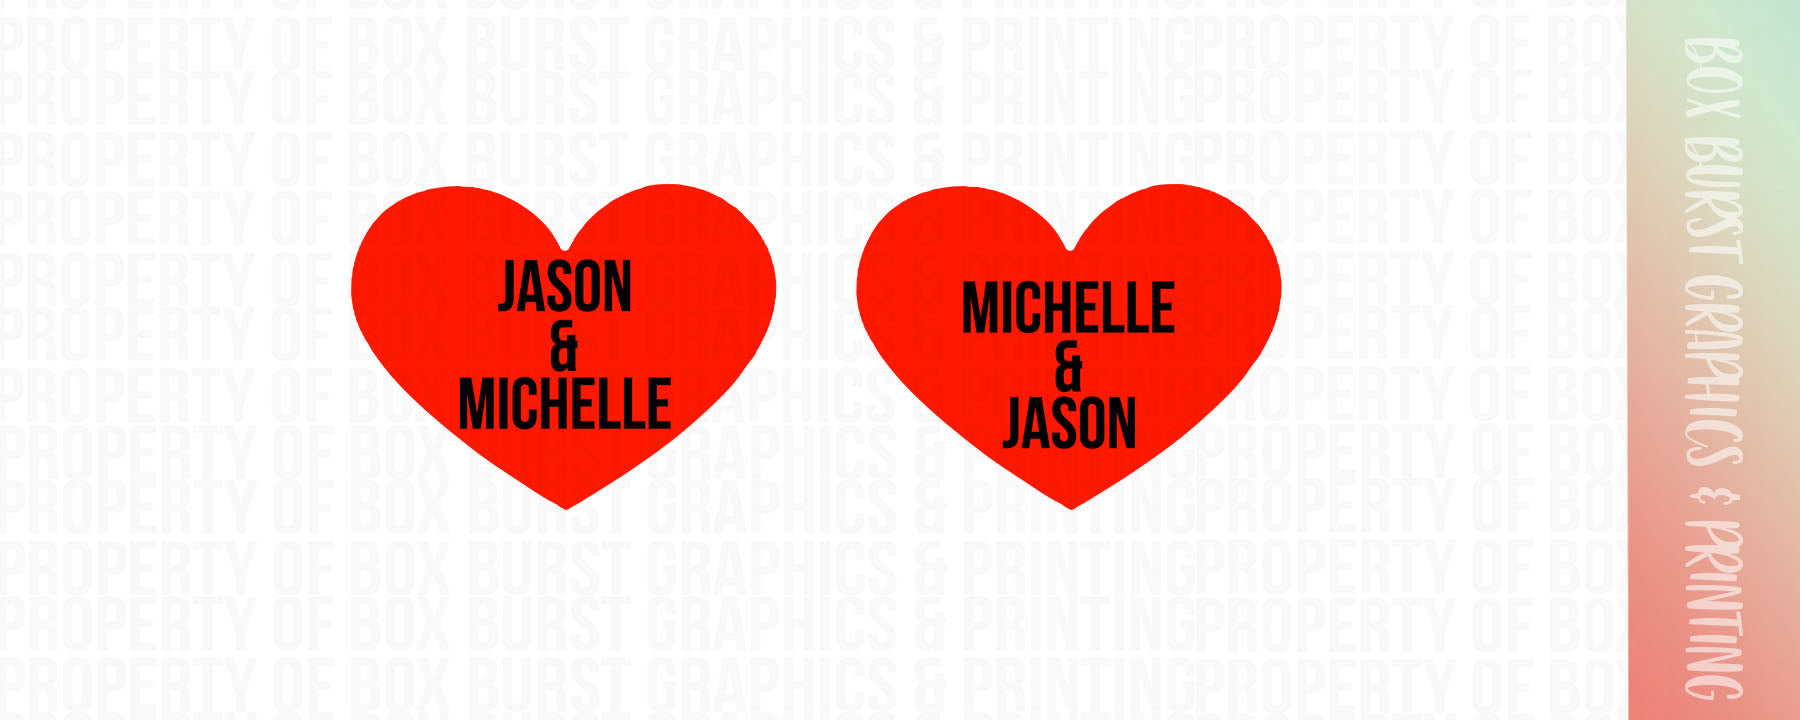 Jason + Michelle // Michelle + Jason 3.5" x 5" inch red and black decals